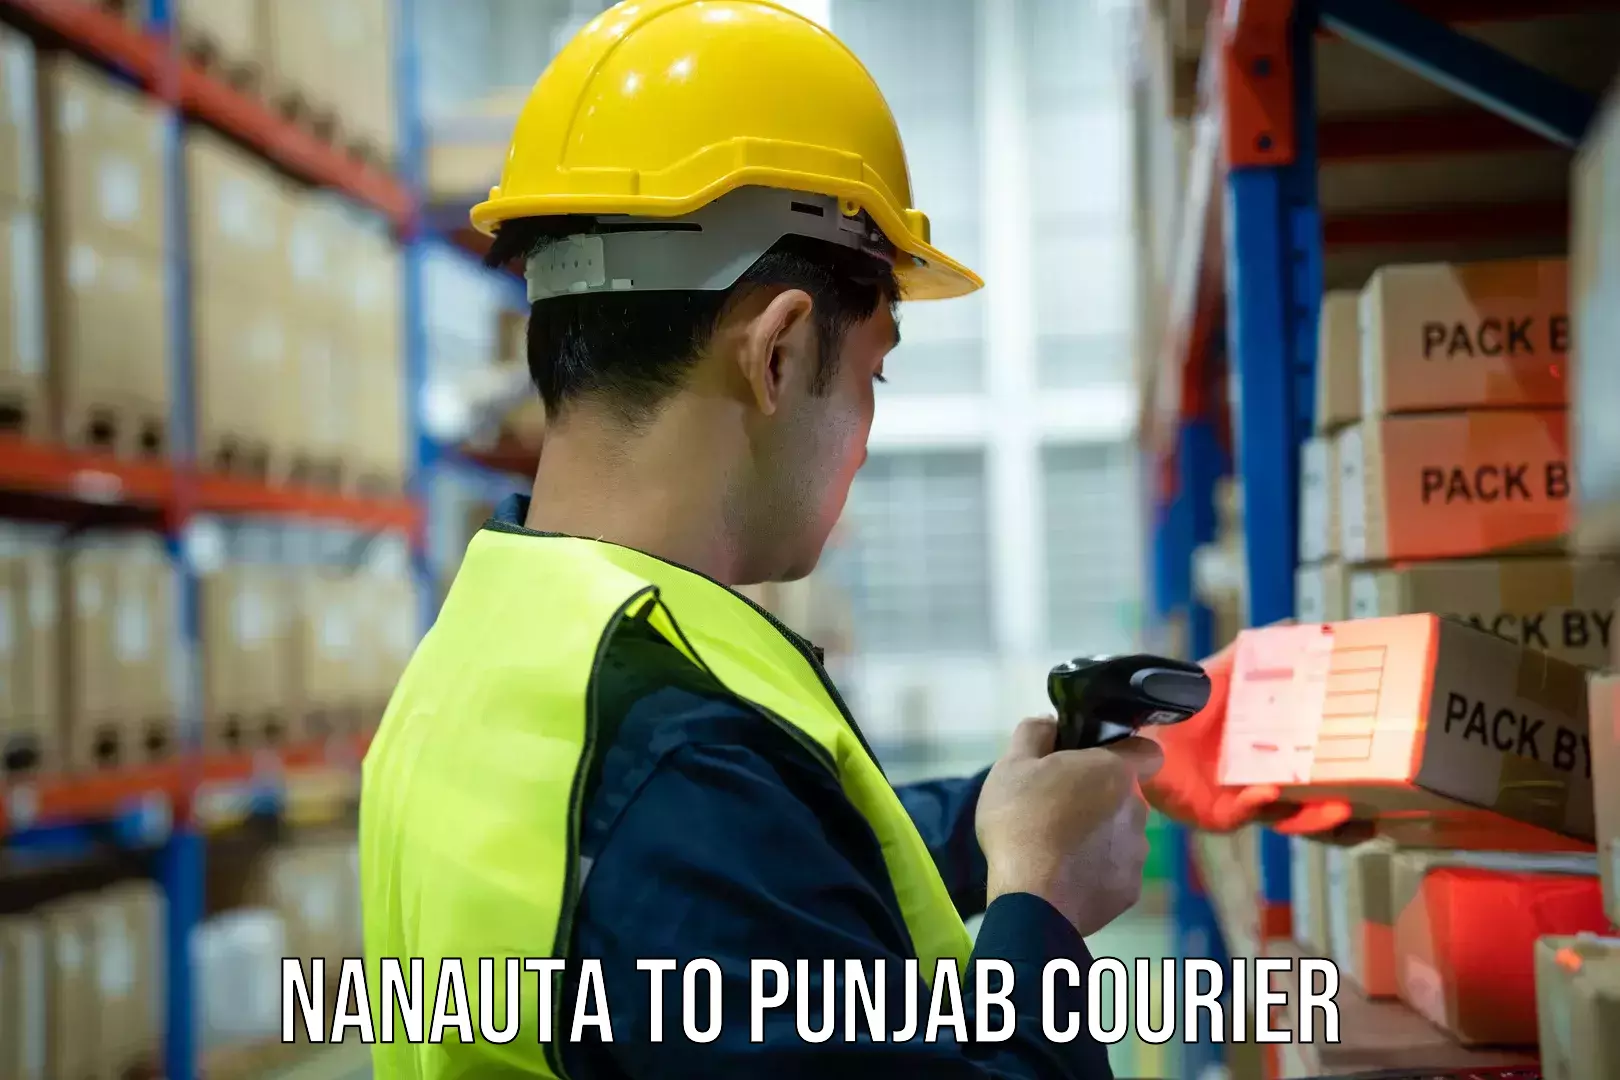 Courier service efficiency Nanauta to Punjab